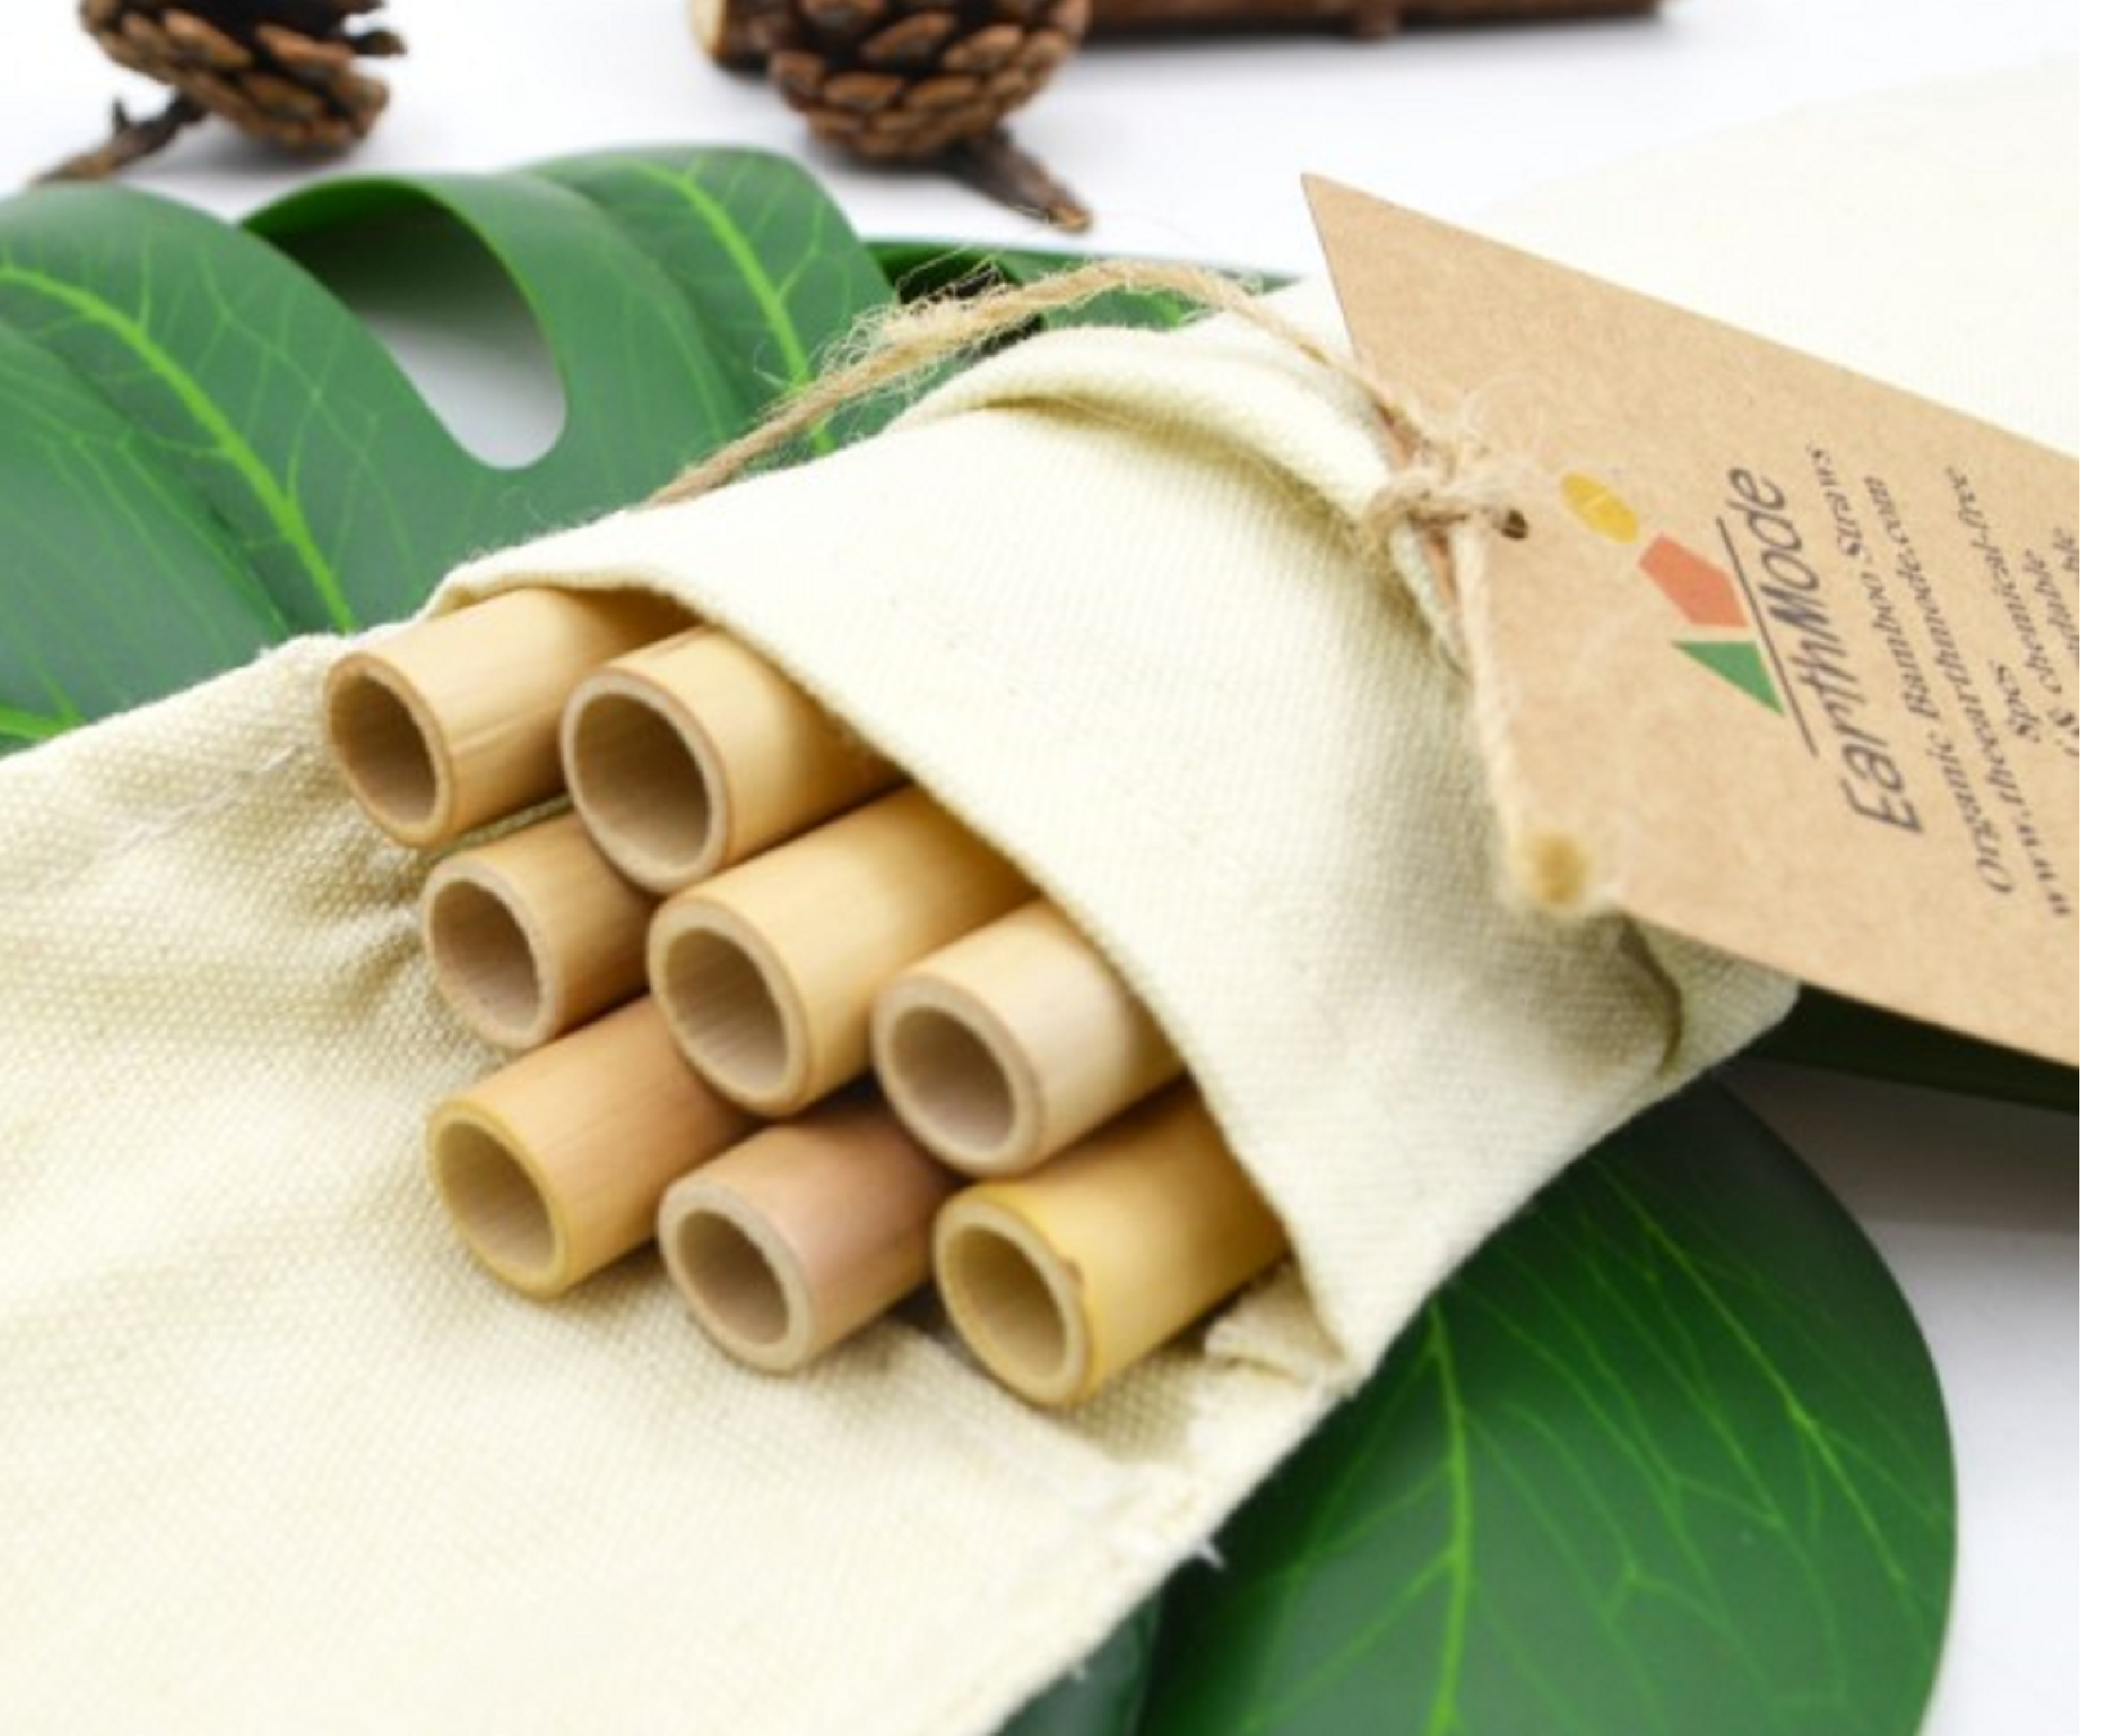 4 Bamboo Straws & Straw Brush Set, Reusable & Ecological